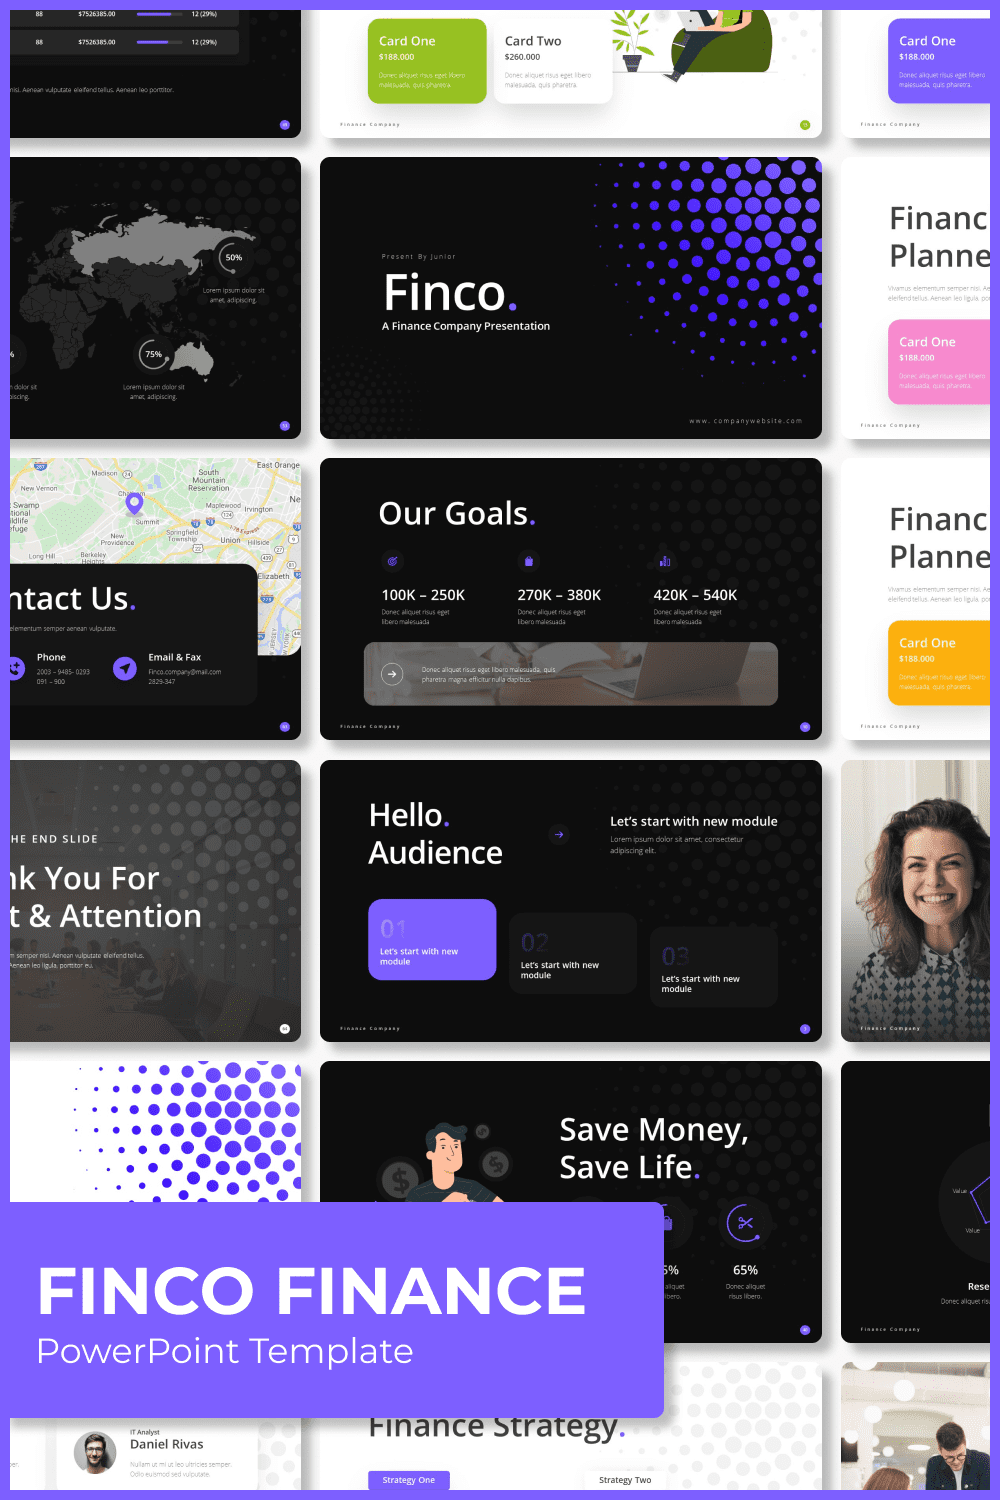 Finco Finance PowerPoint Template Pinterest.